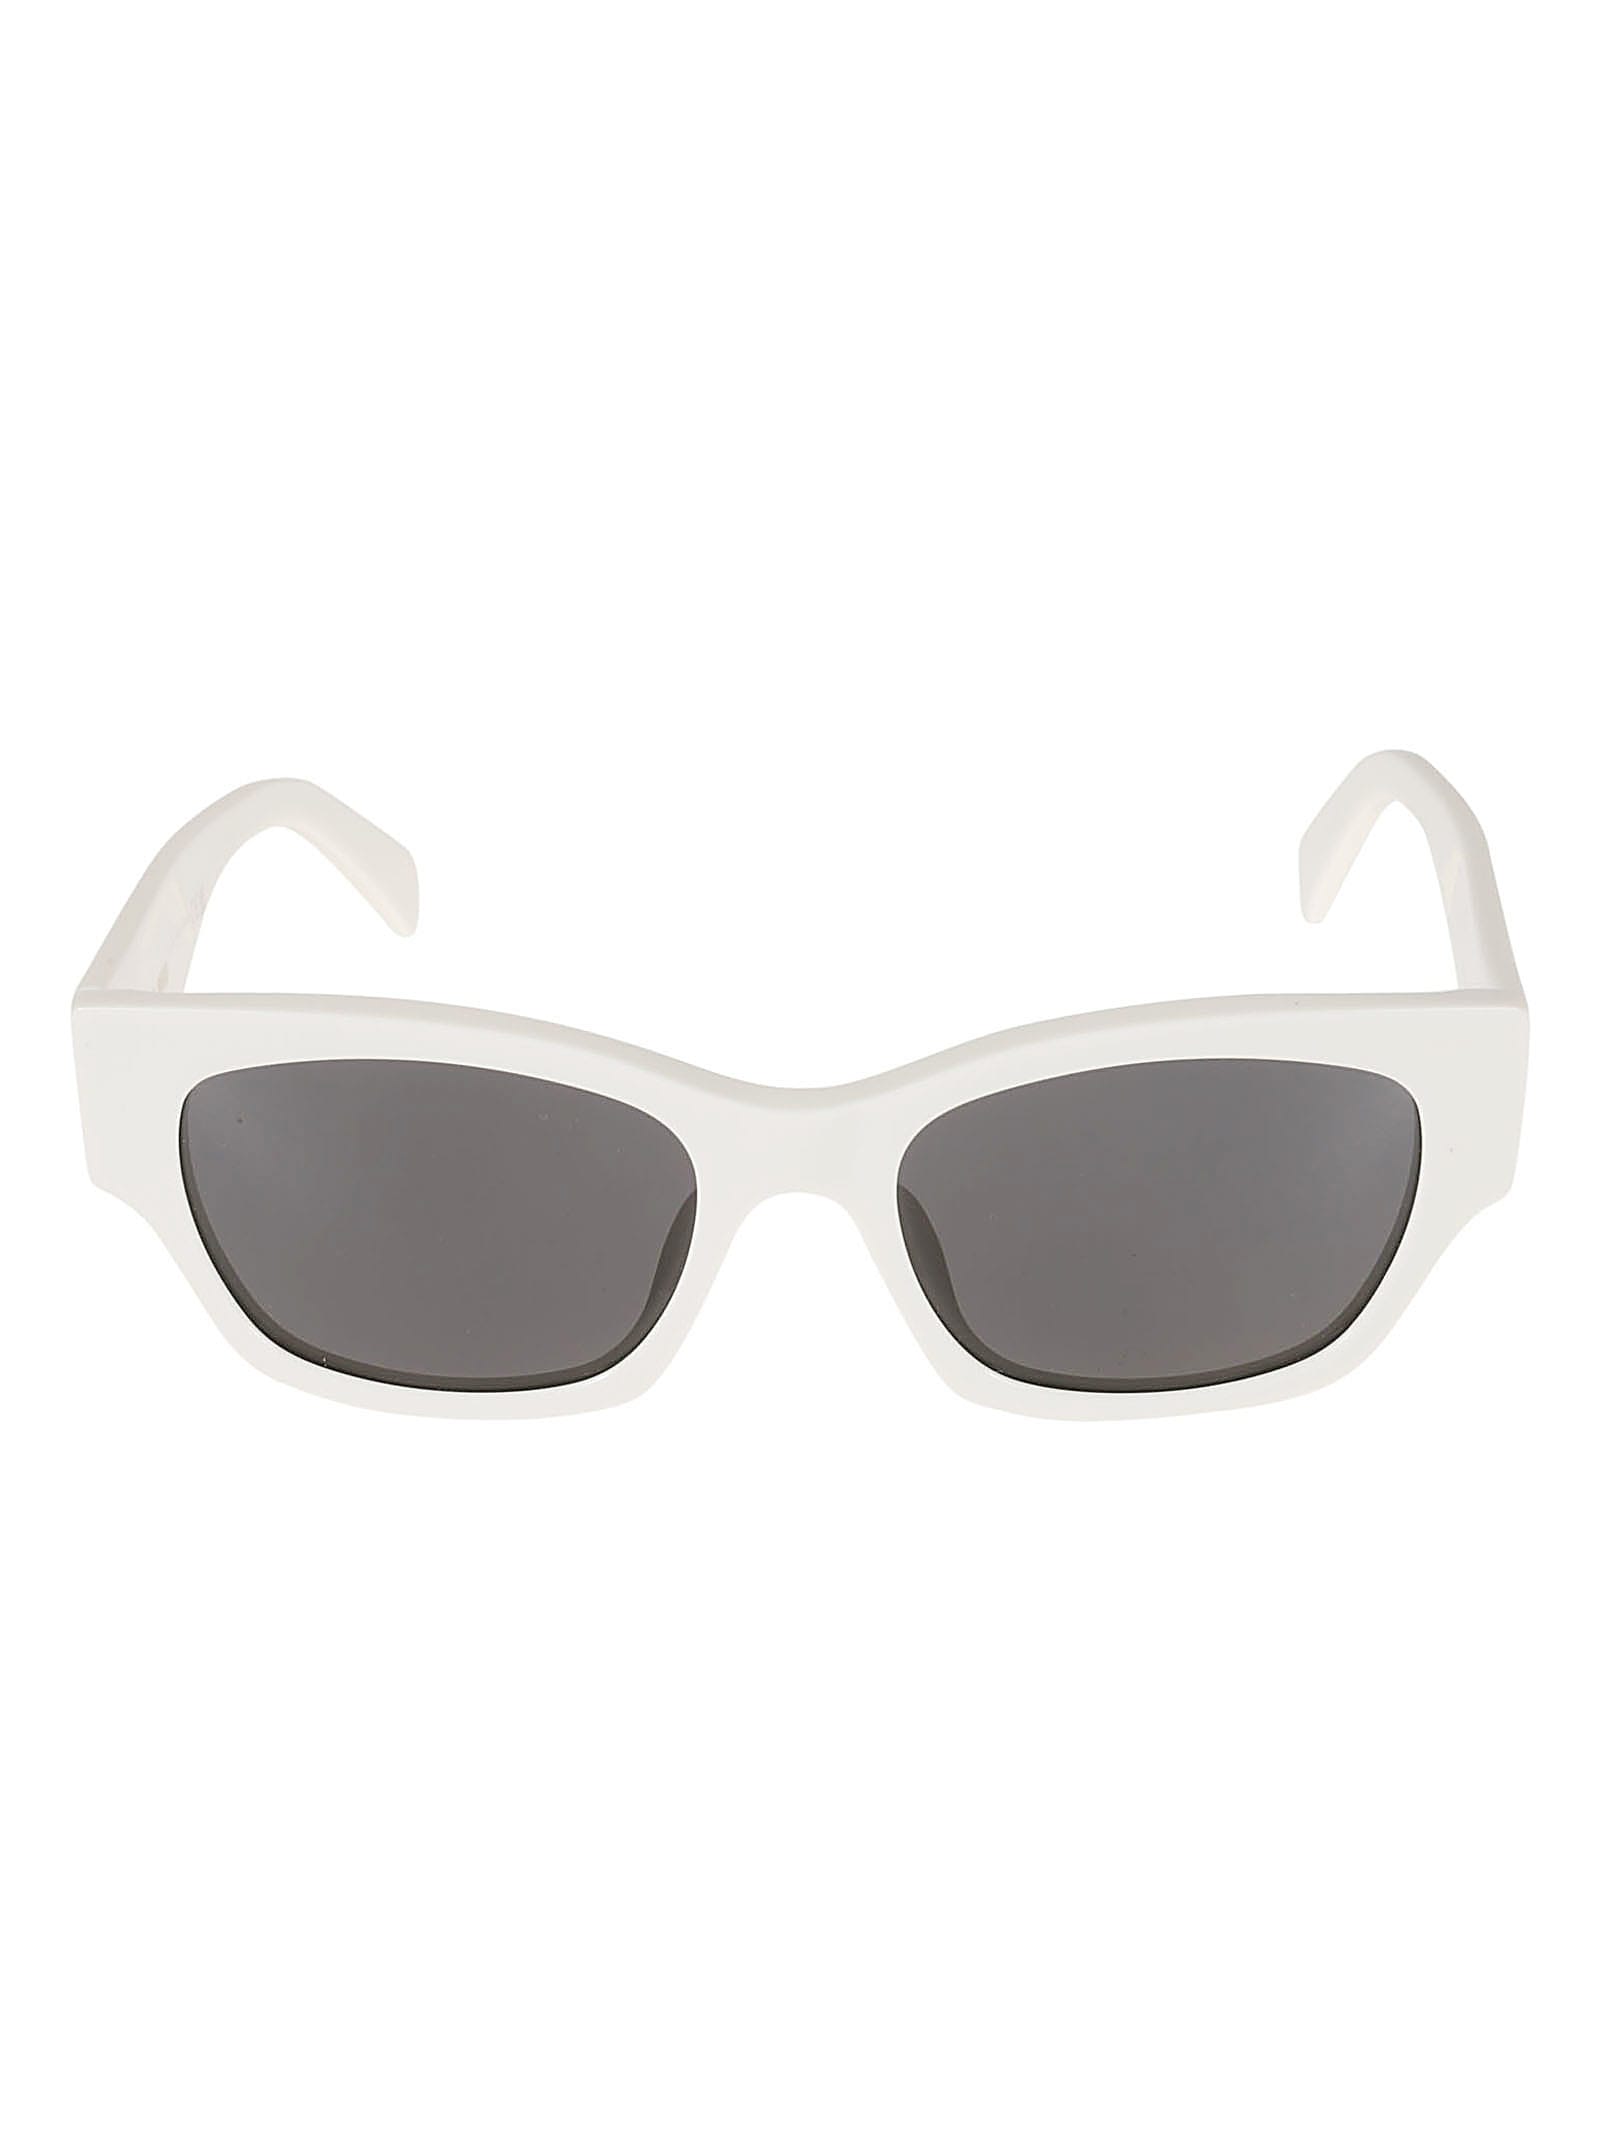 Celine Wayfarer Classic Sunglasses